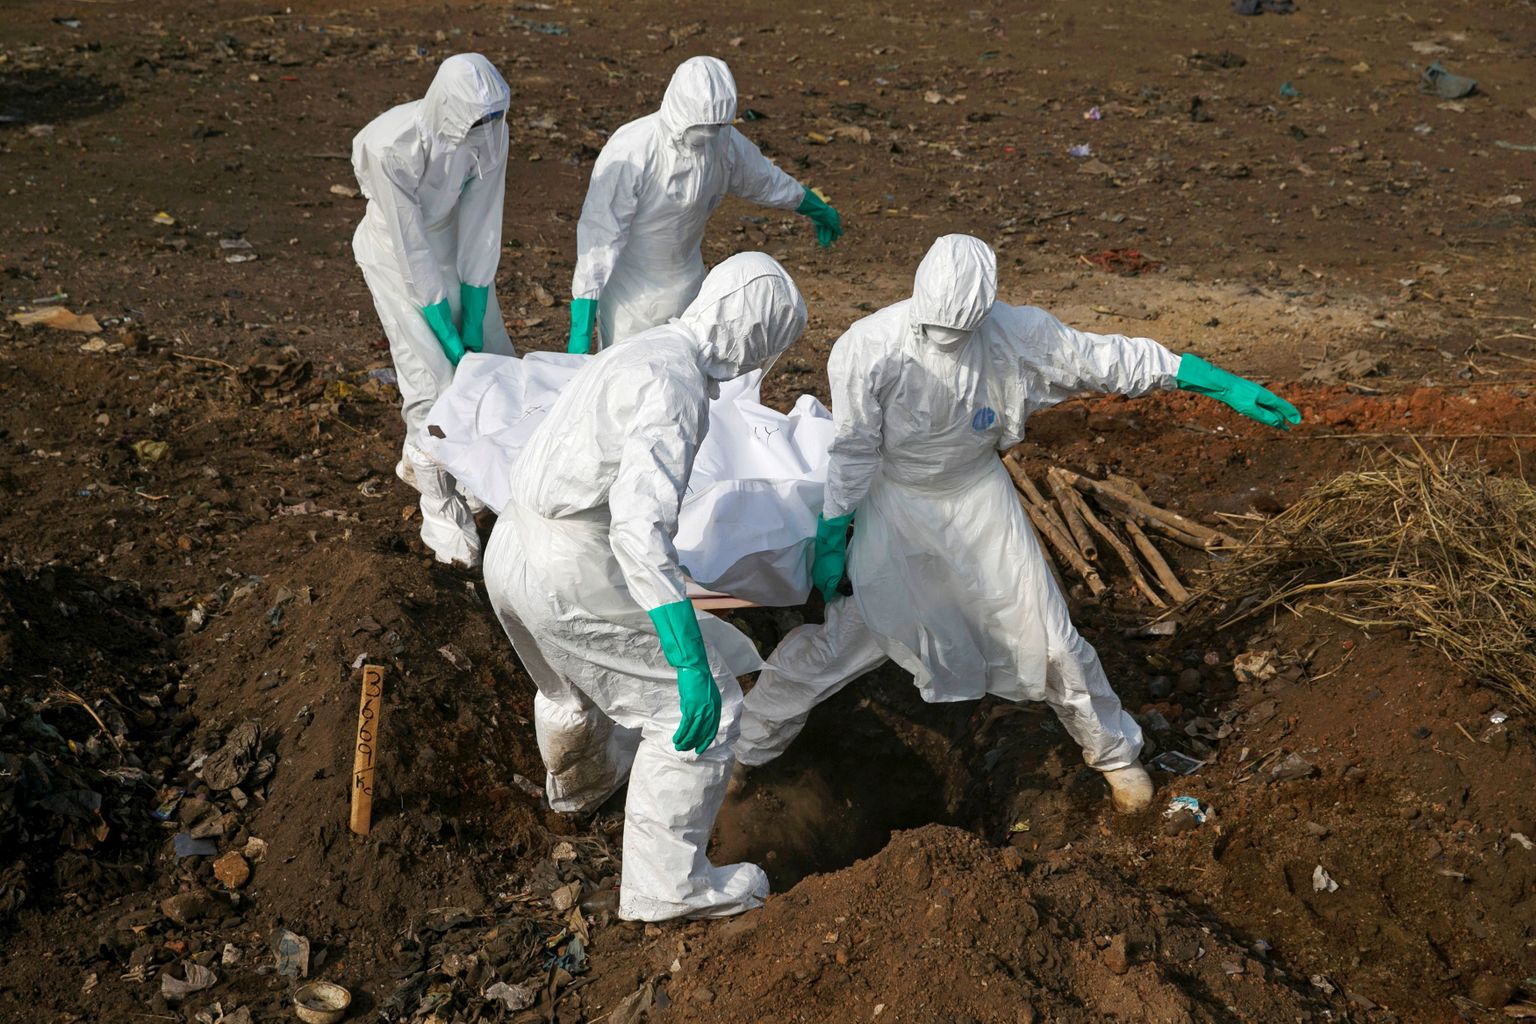 Tervishoiutöötajad Ebola ohvrit matmas.